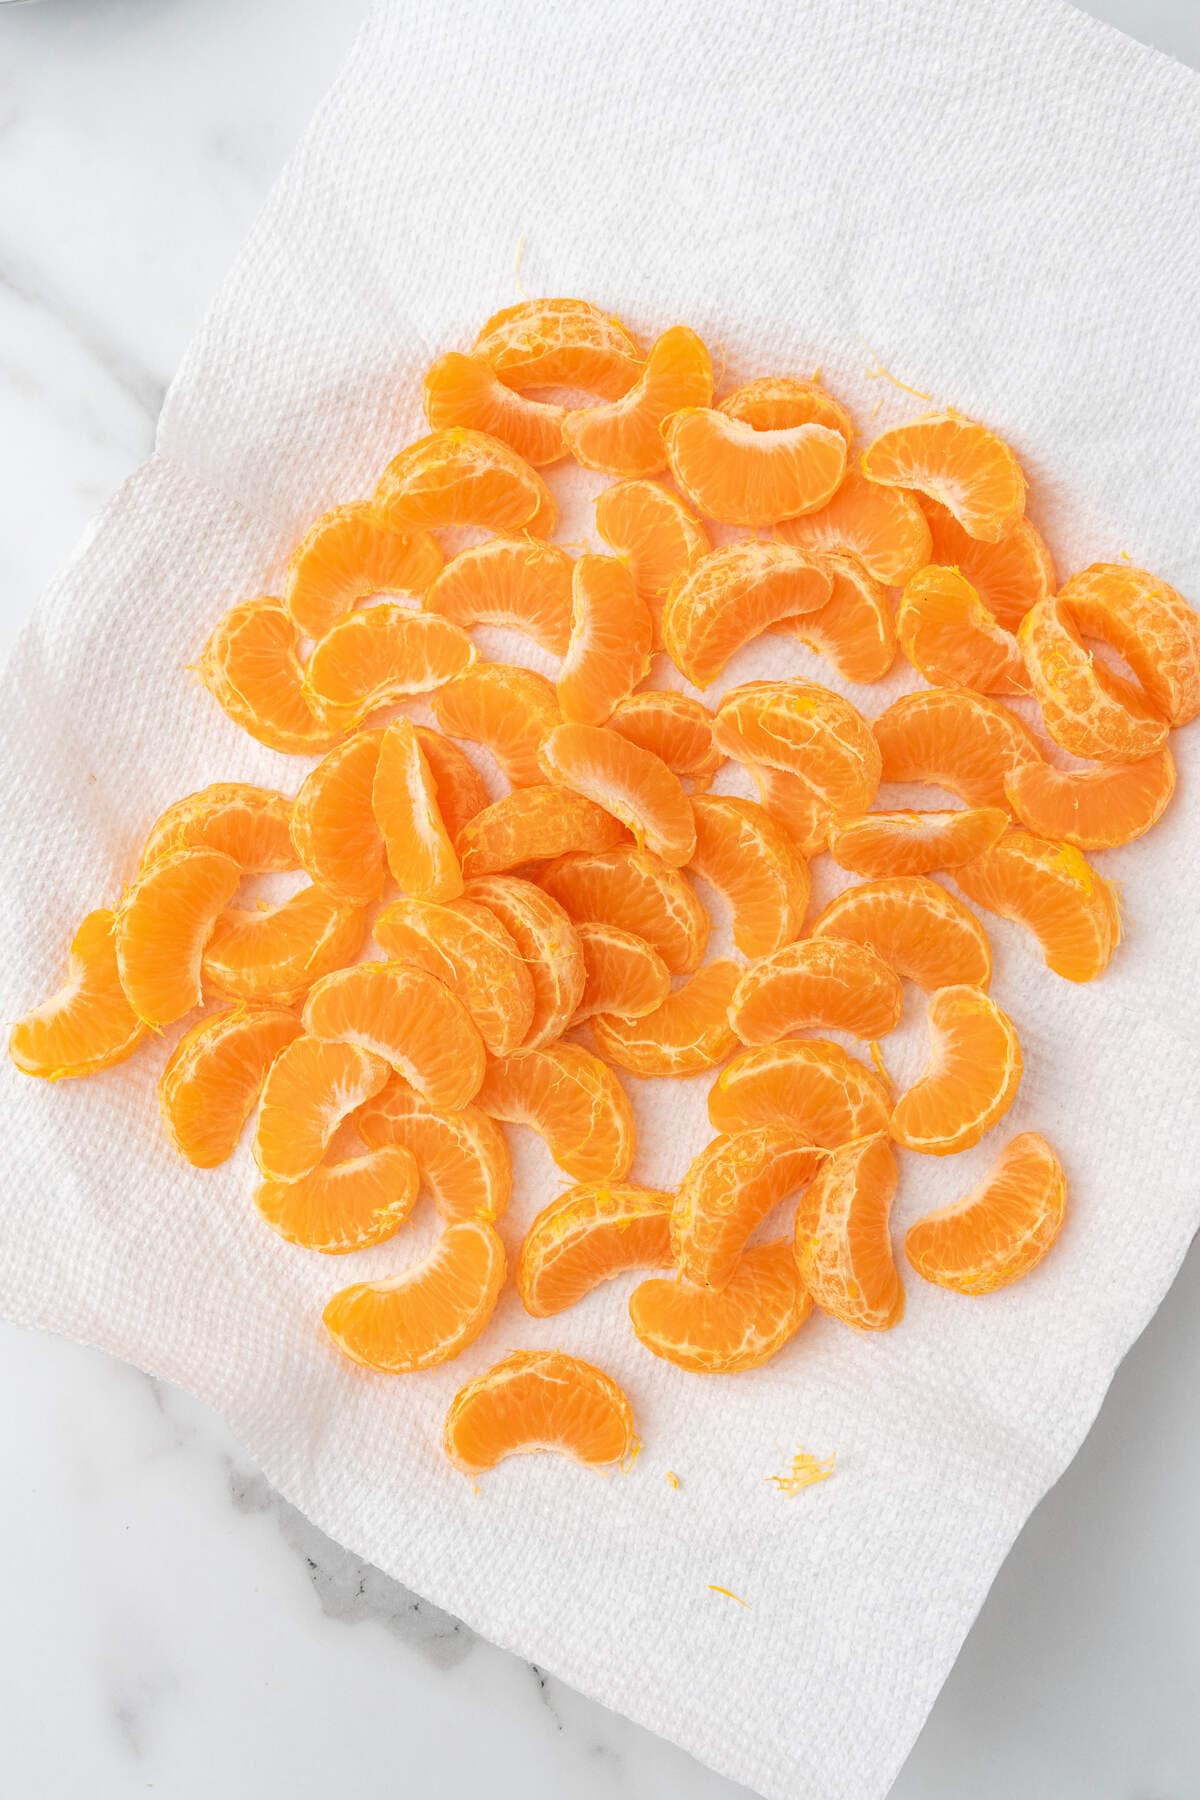 Peeled orange segments on a paper towel. 